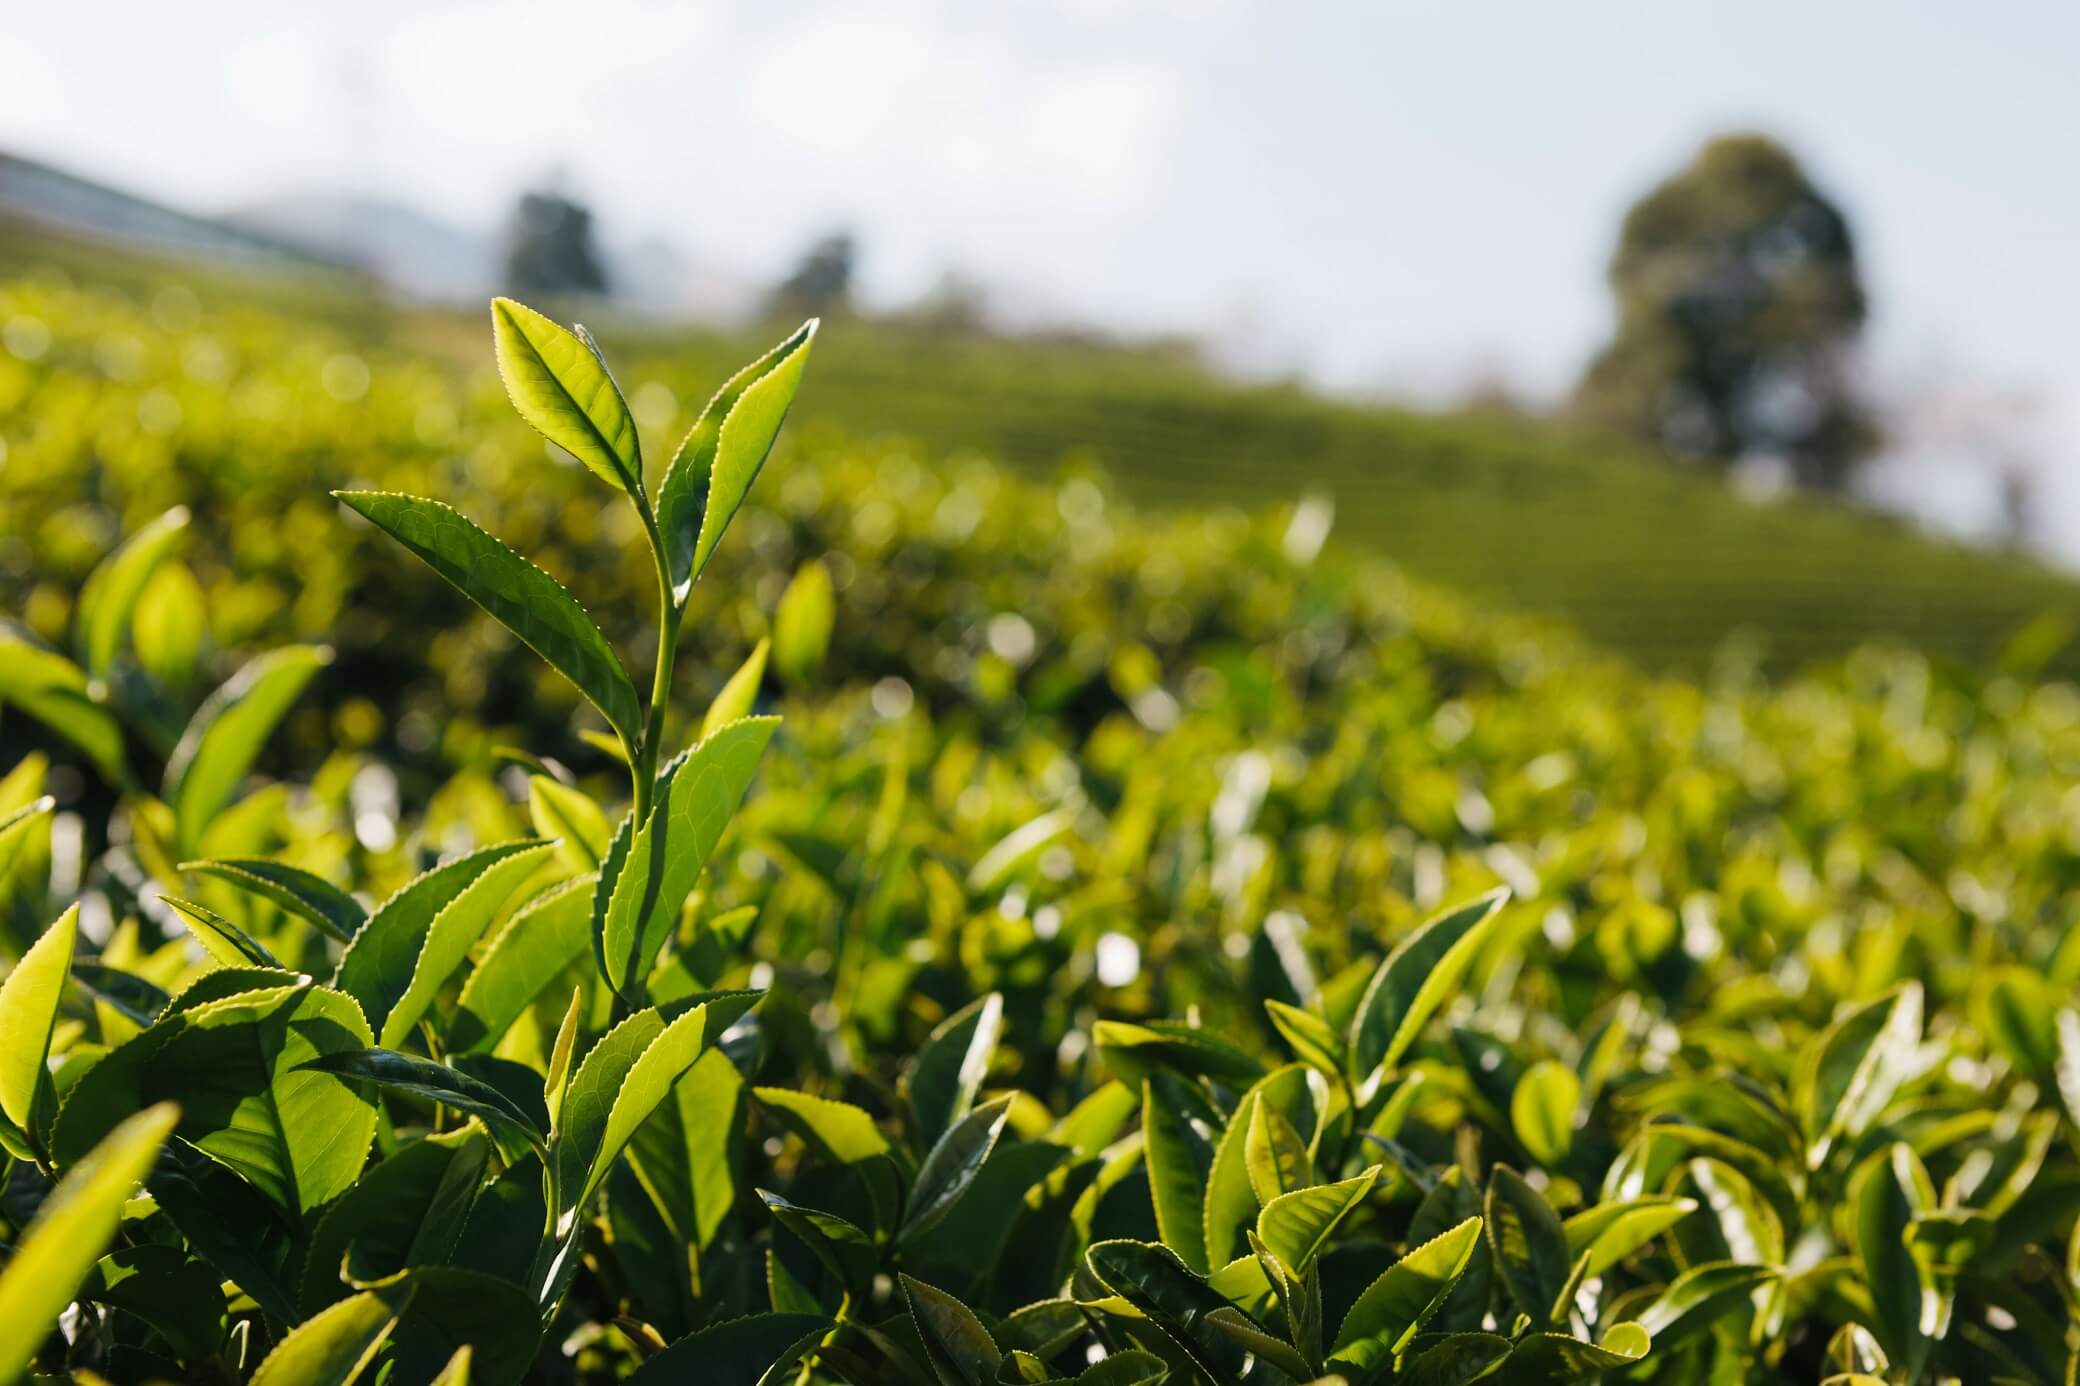  the popular healthy Green Tea